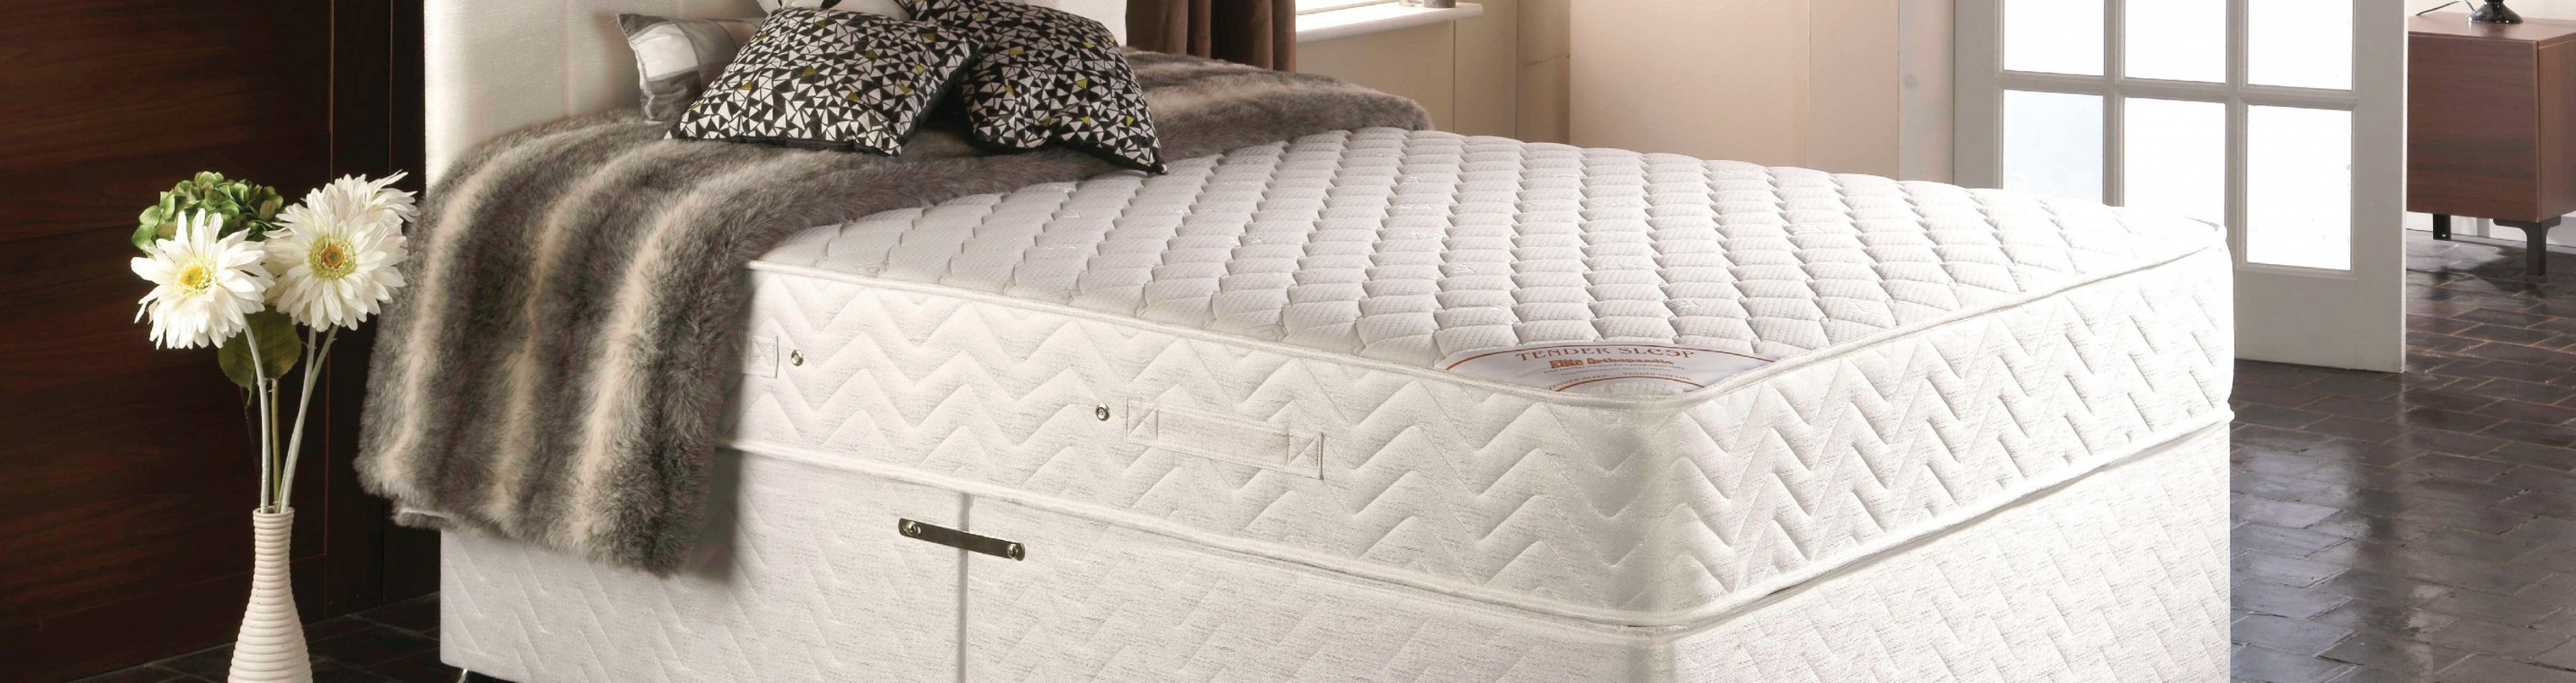 /_images/product-photos/tender-sleep-elite-orthopaedic-mattress-a.jpg